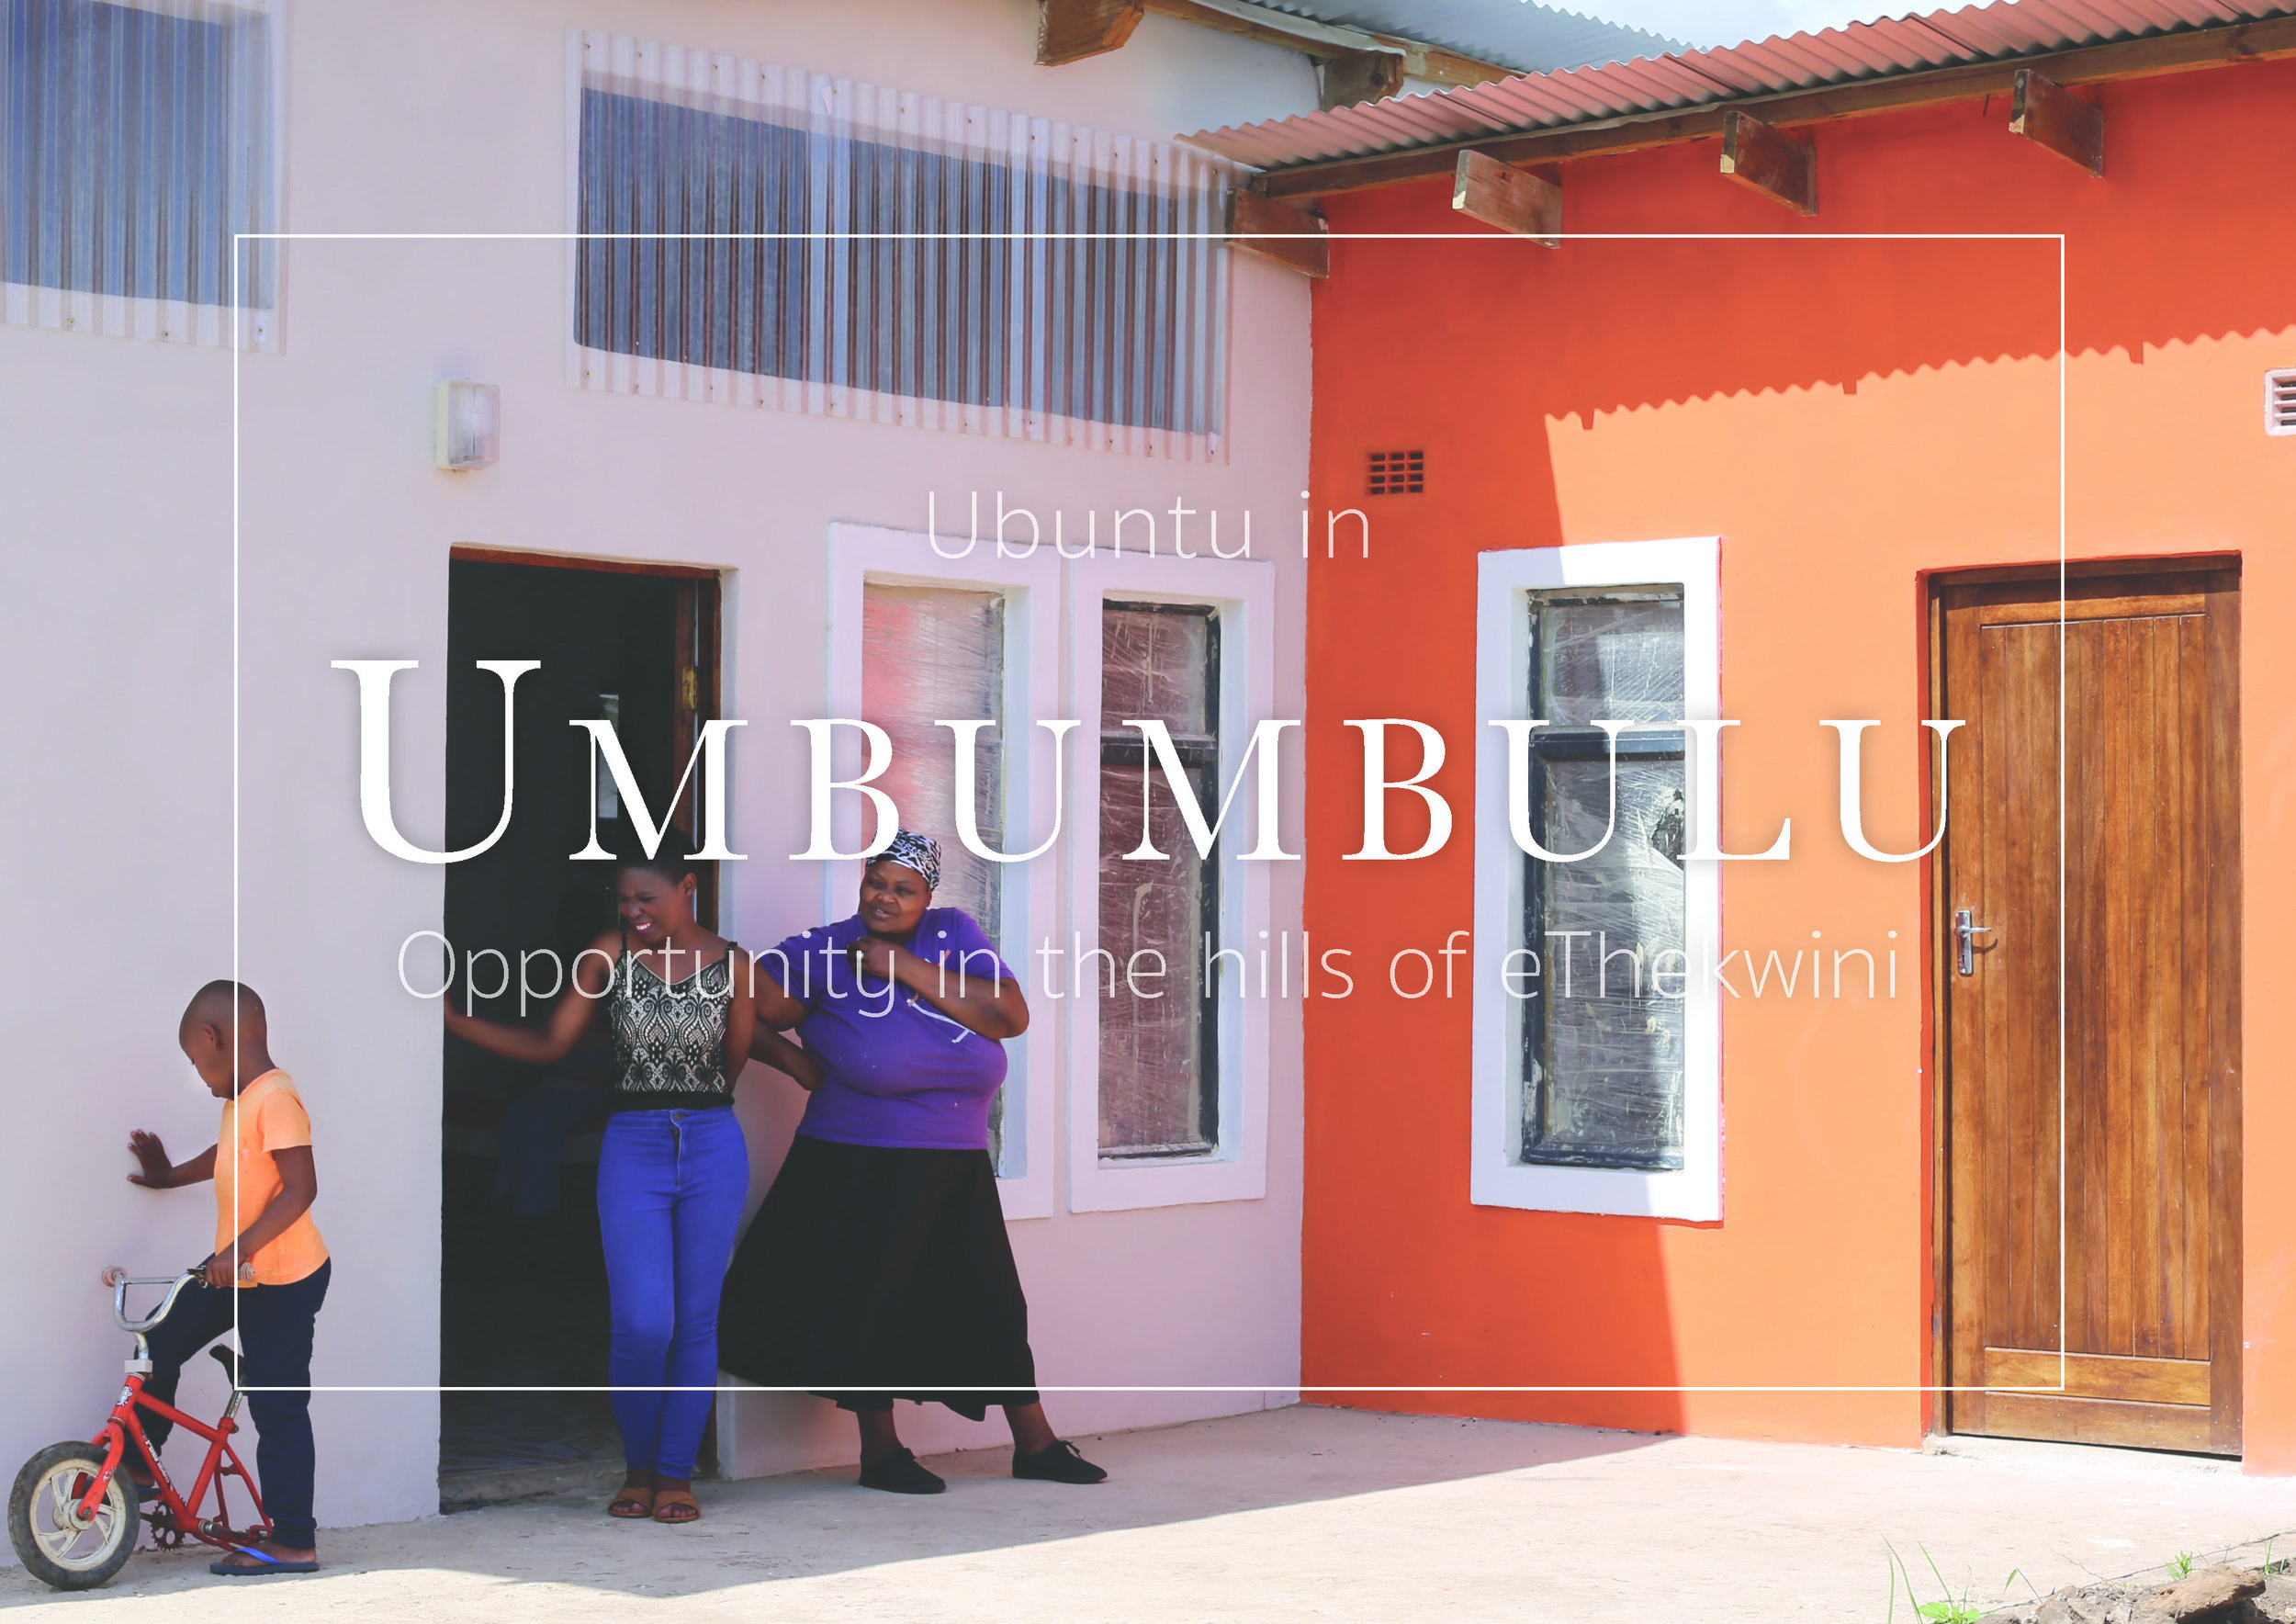 Umbumbulu, South Africa